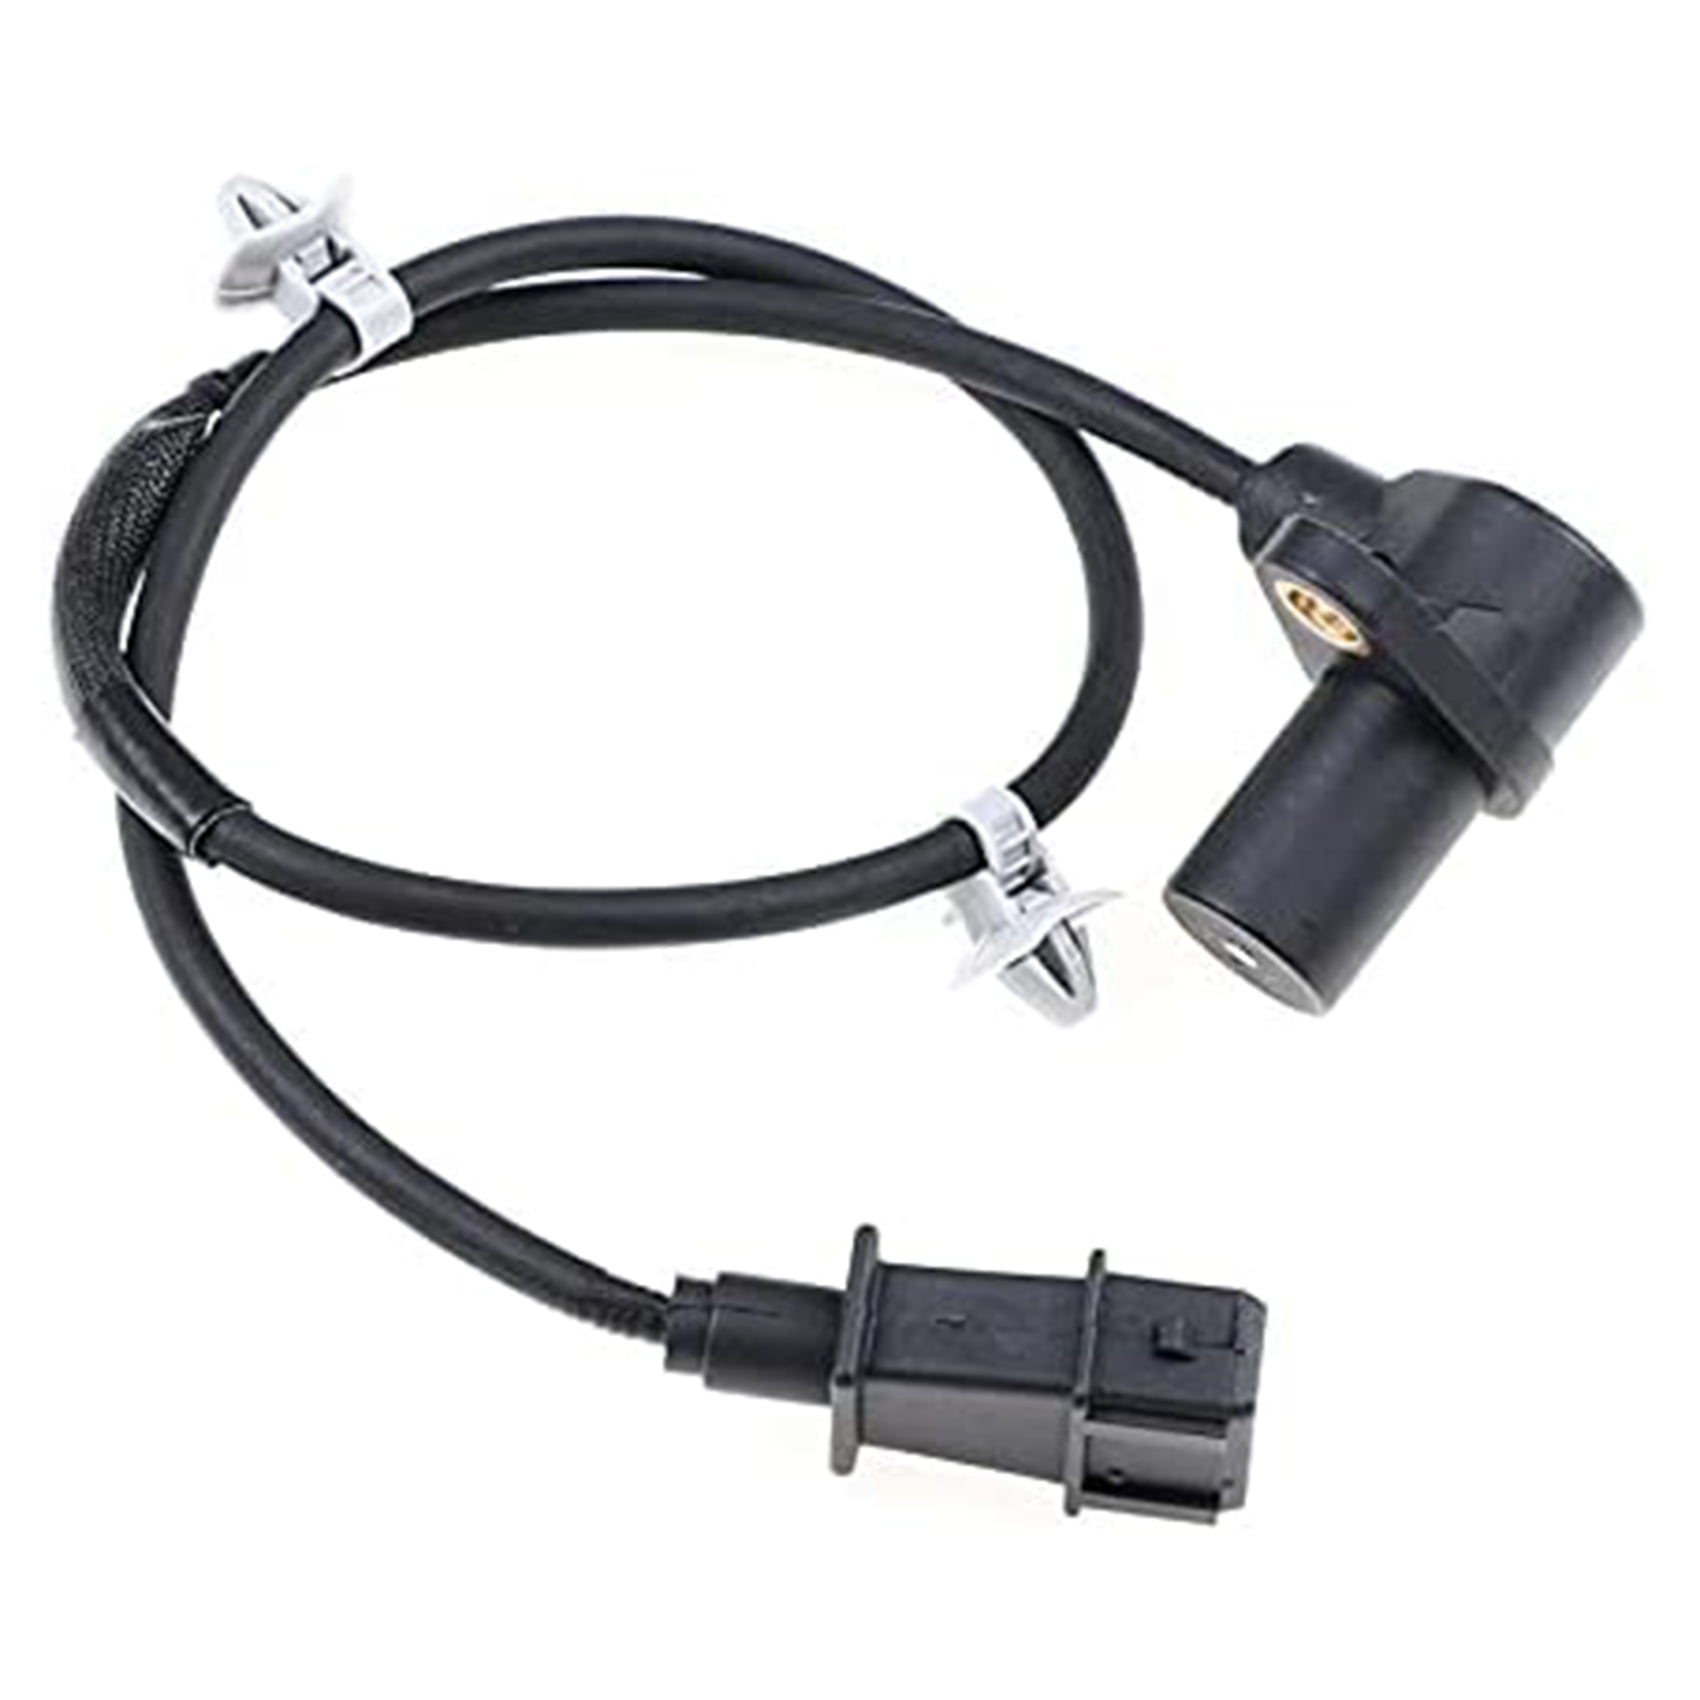 Details about   Crankshaft Pulse Sensor For HYUNDAI KIA H-1 Starex Bongo K2500 39650-42600 